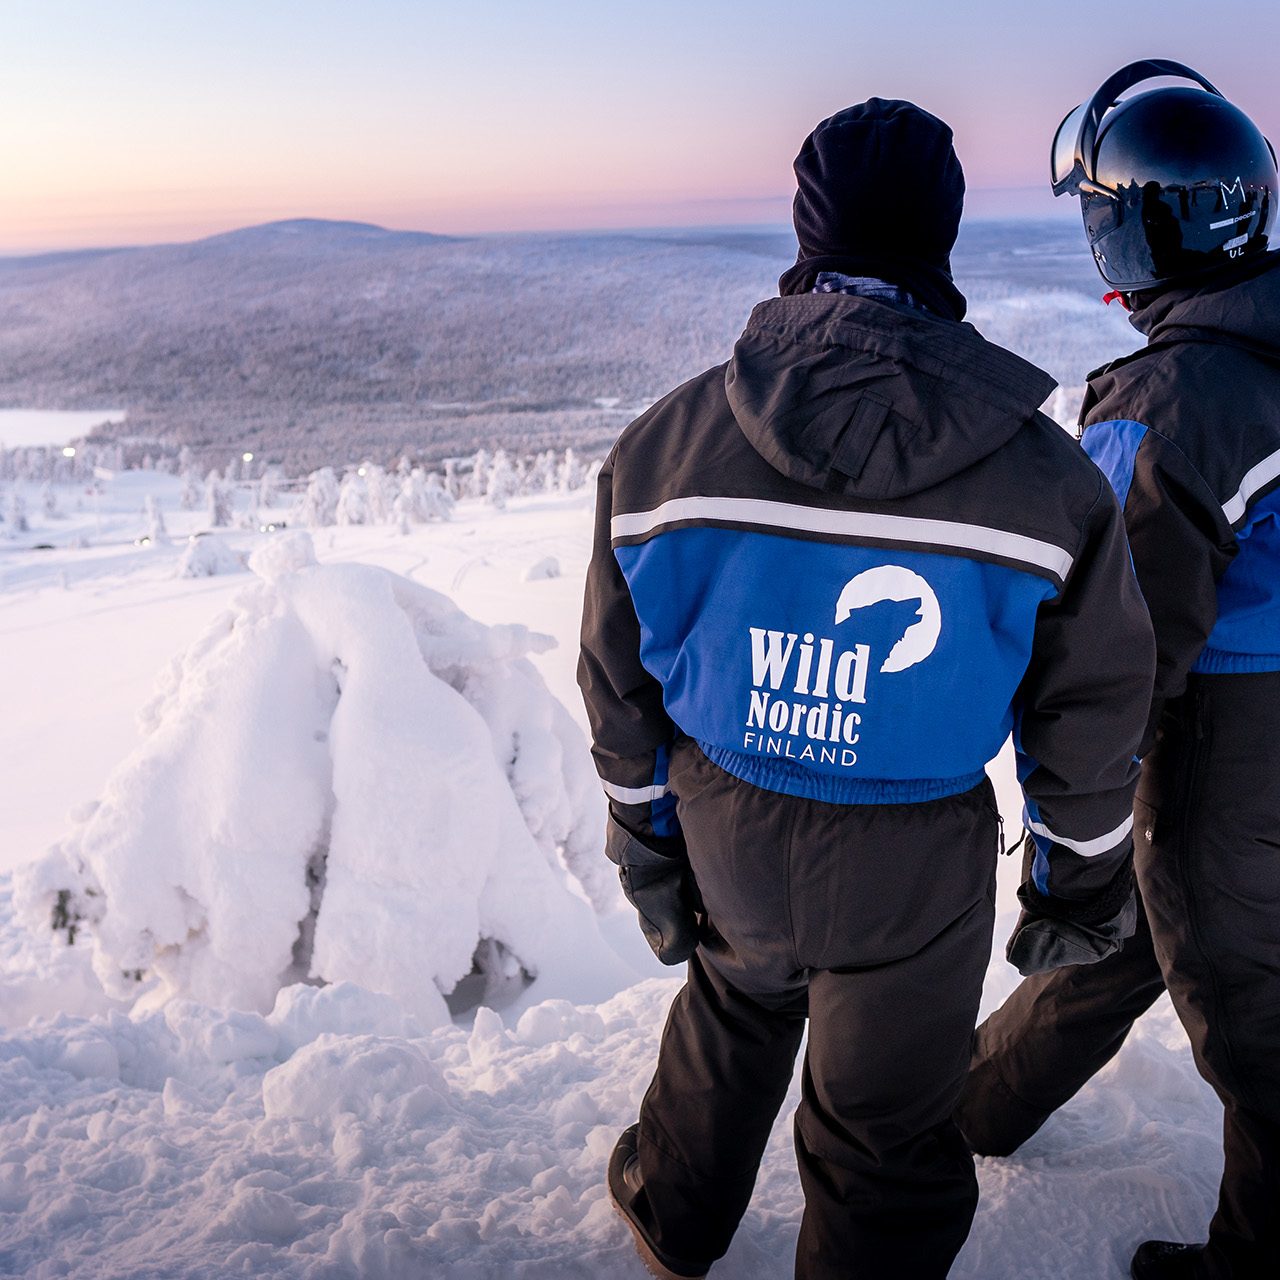 Incentives – Lapland / Wild Nordic Finland @wildnordicfinland